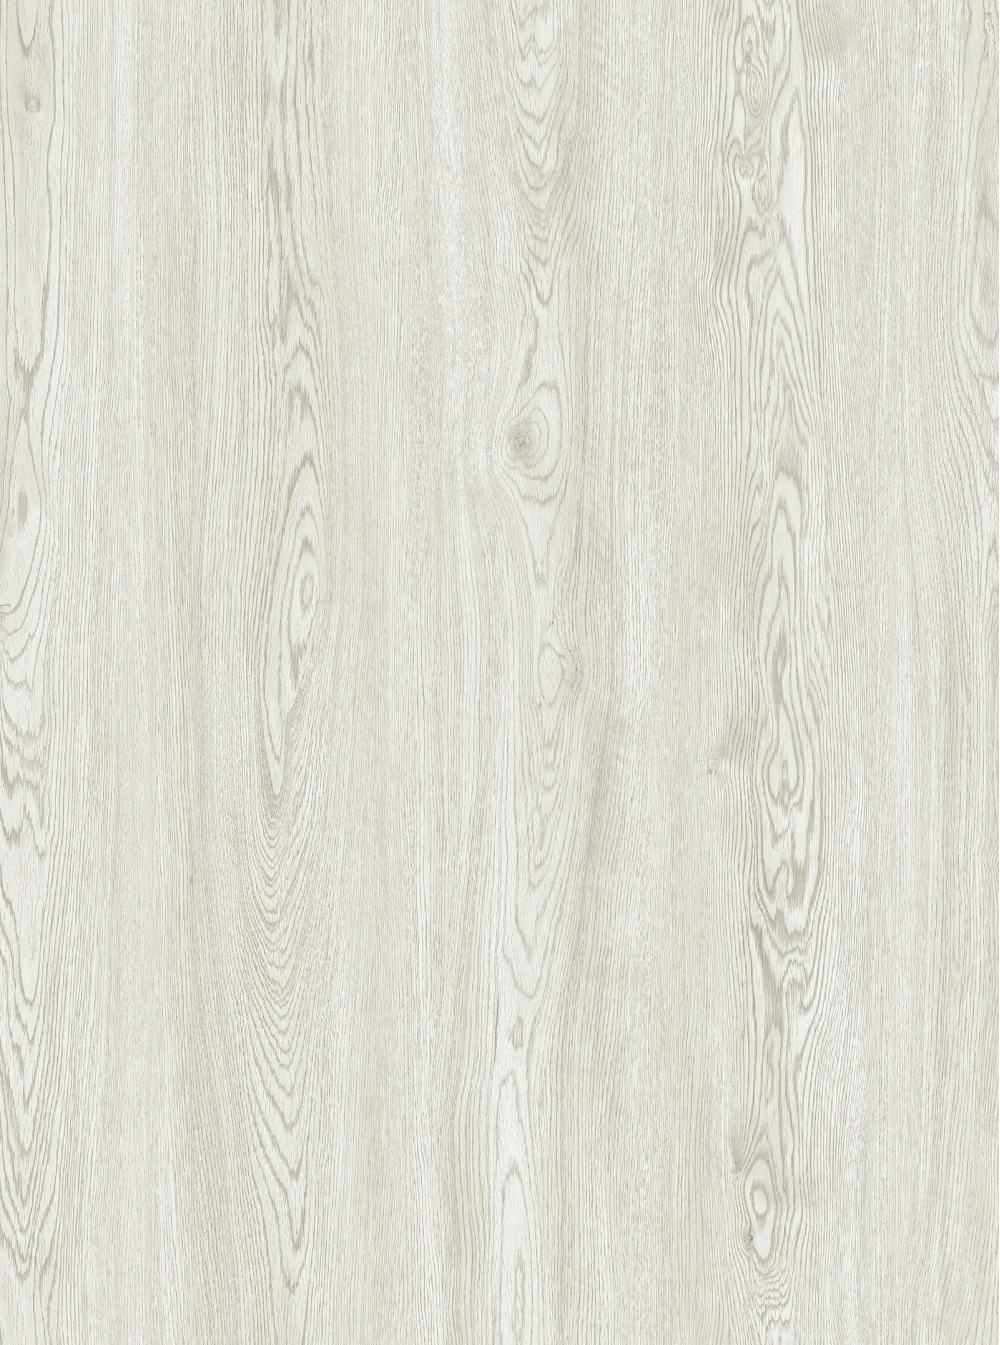 Anti-Scratch Wooden Look Interlocking Click Flooring